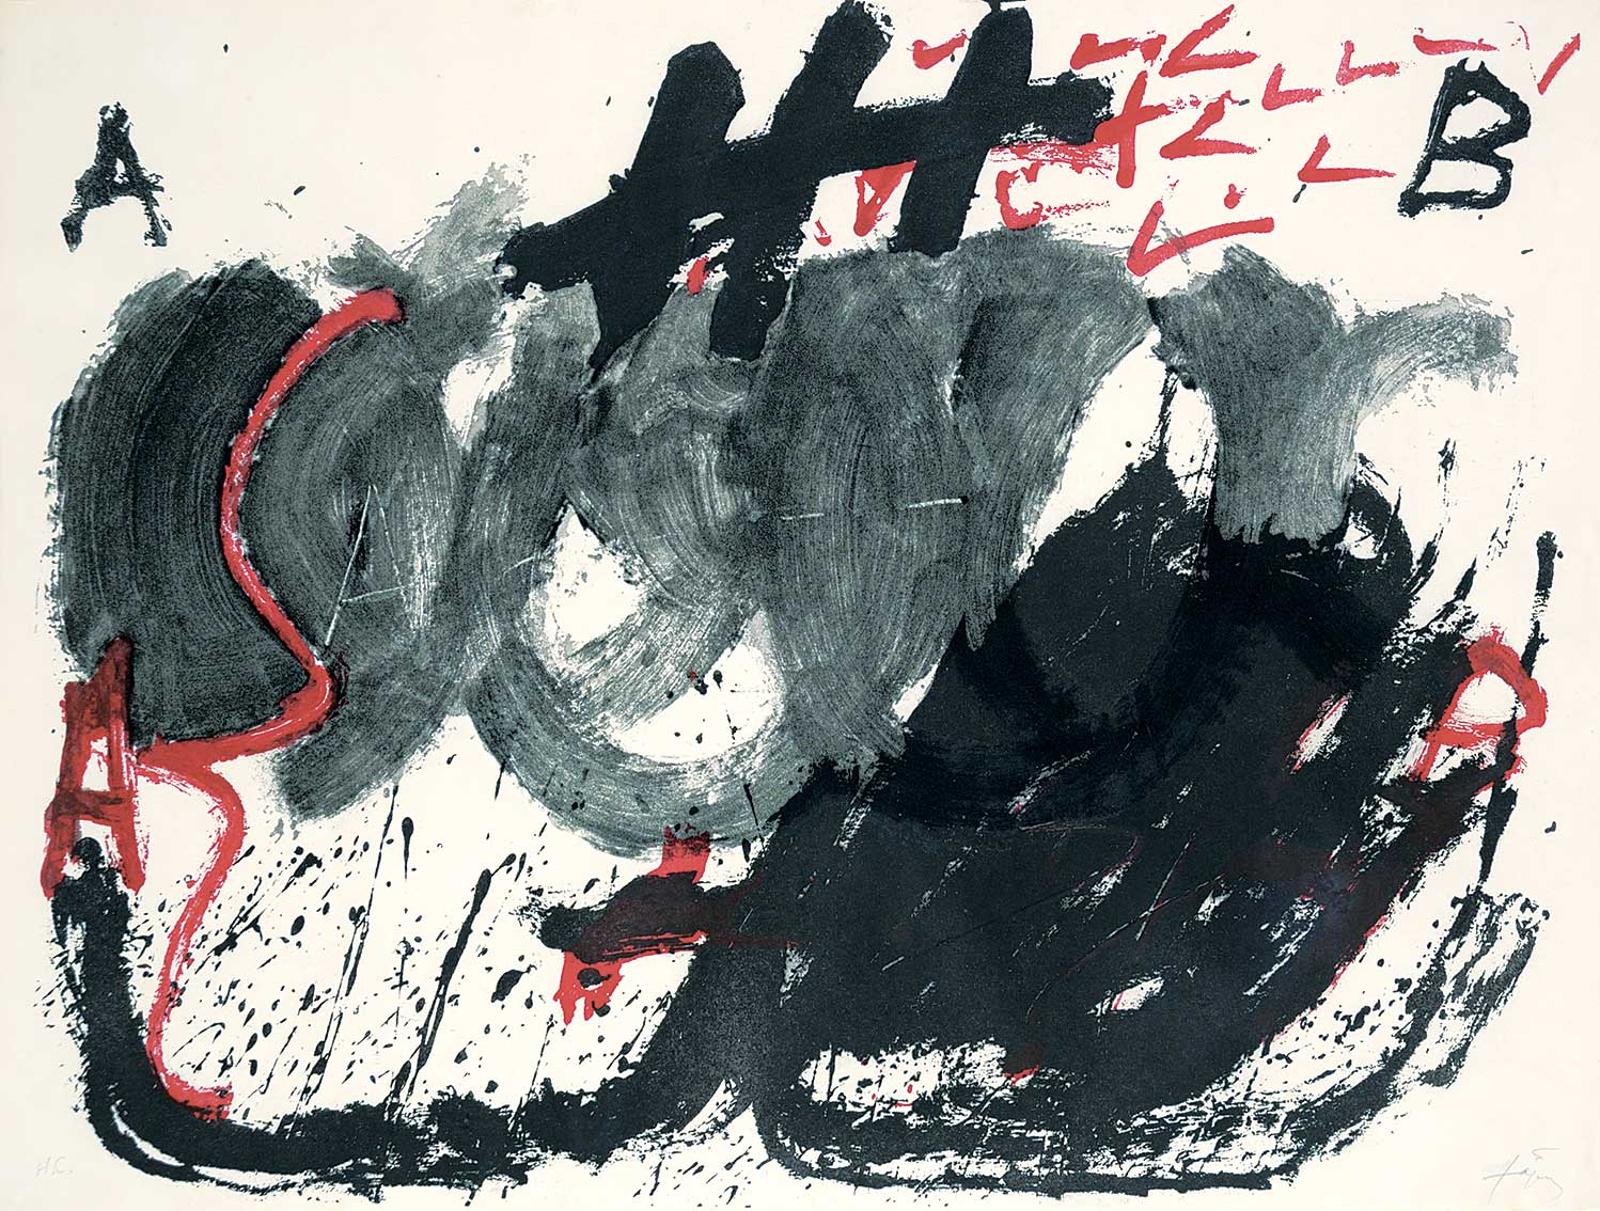 Antoni Tàpies (1923-2012) - Espiral [from the series Negre i roig] #H.C.